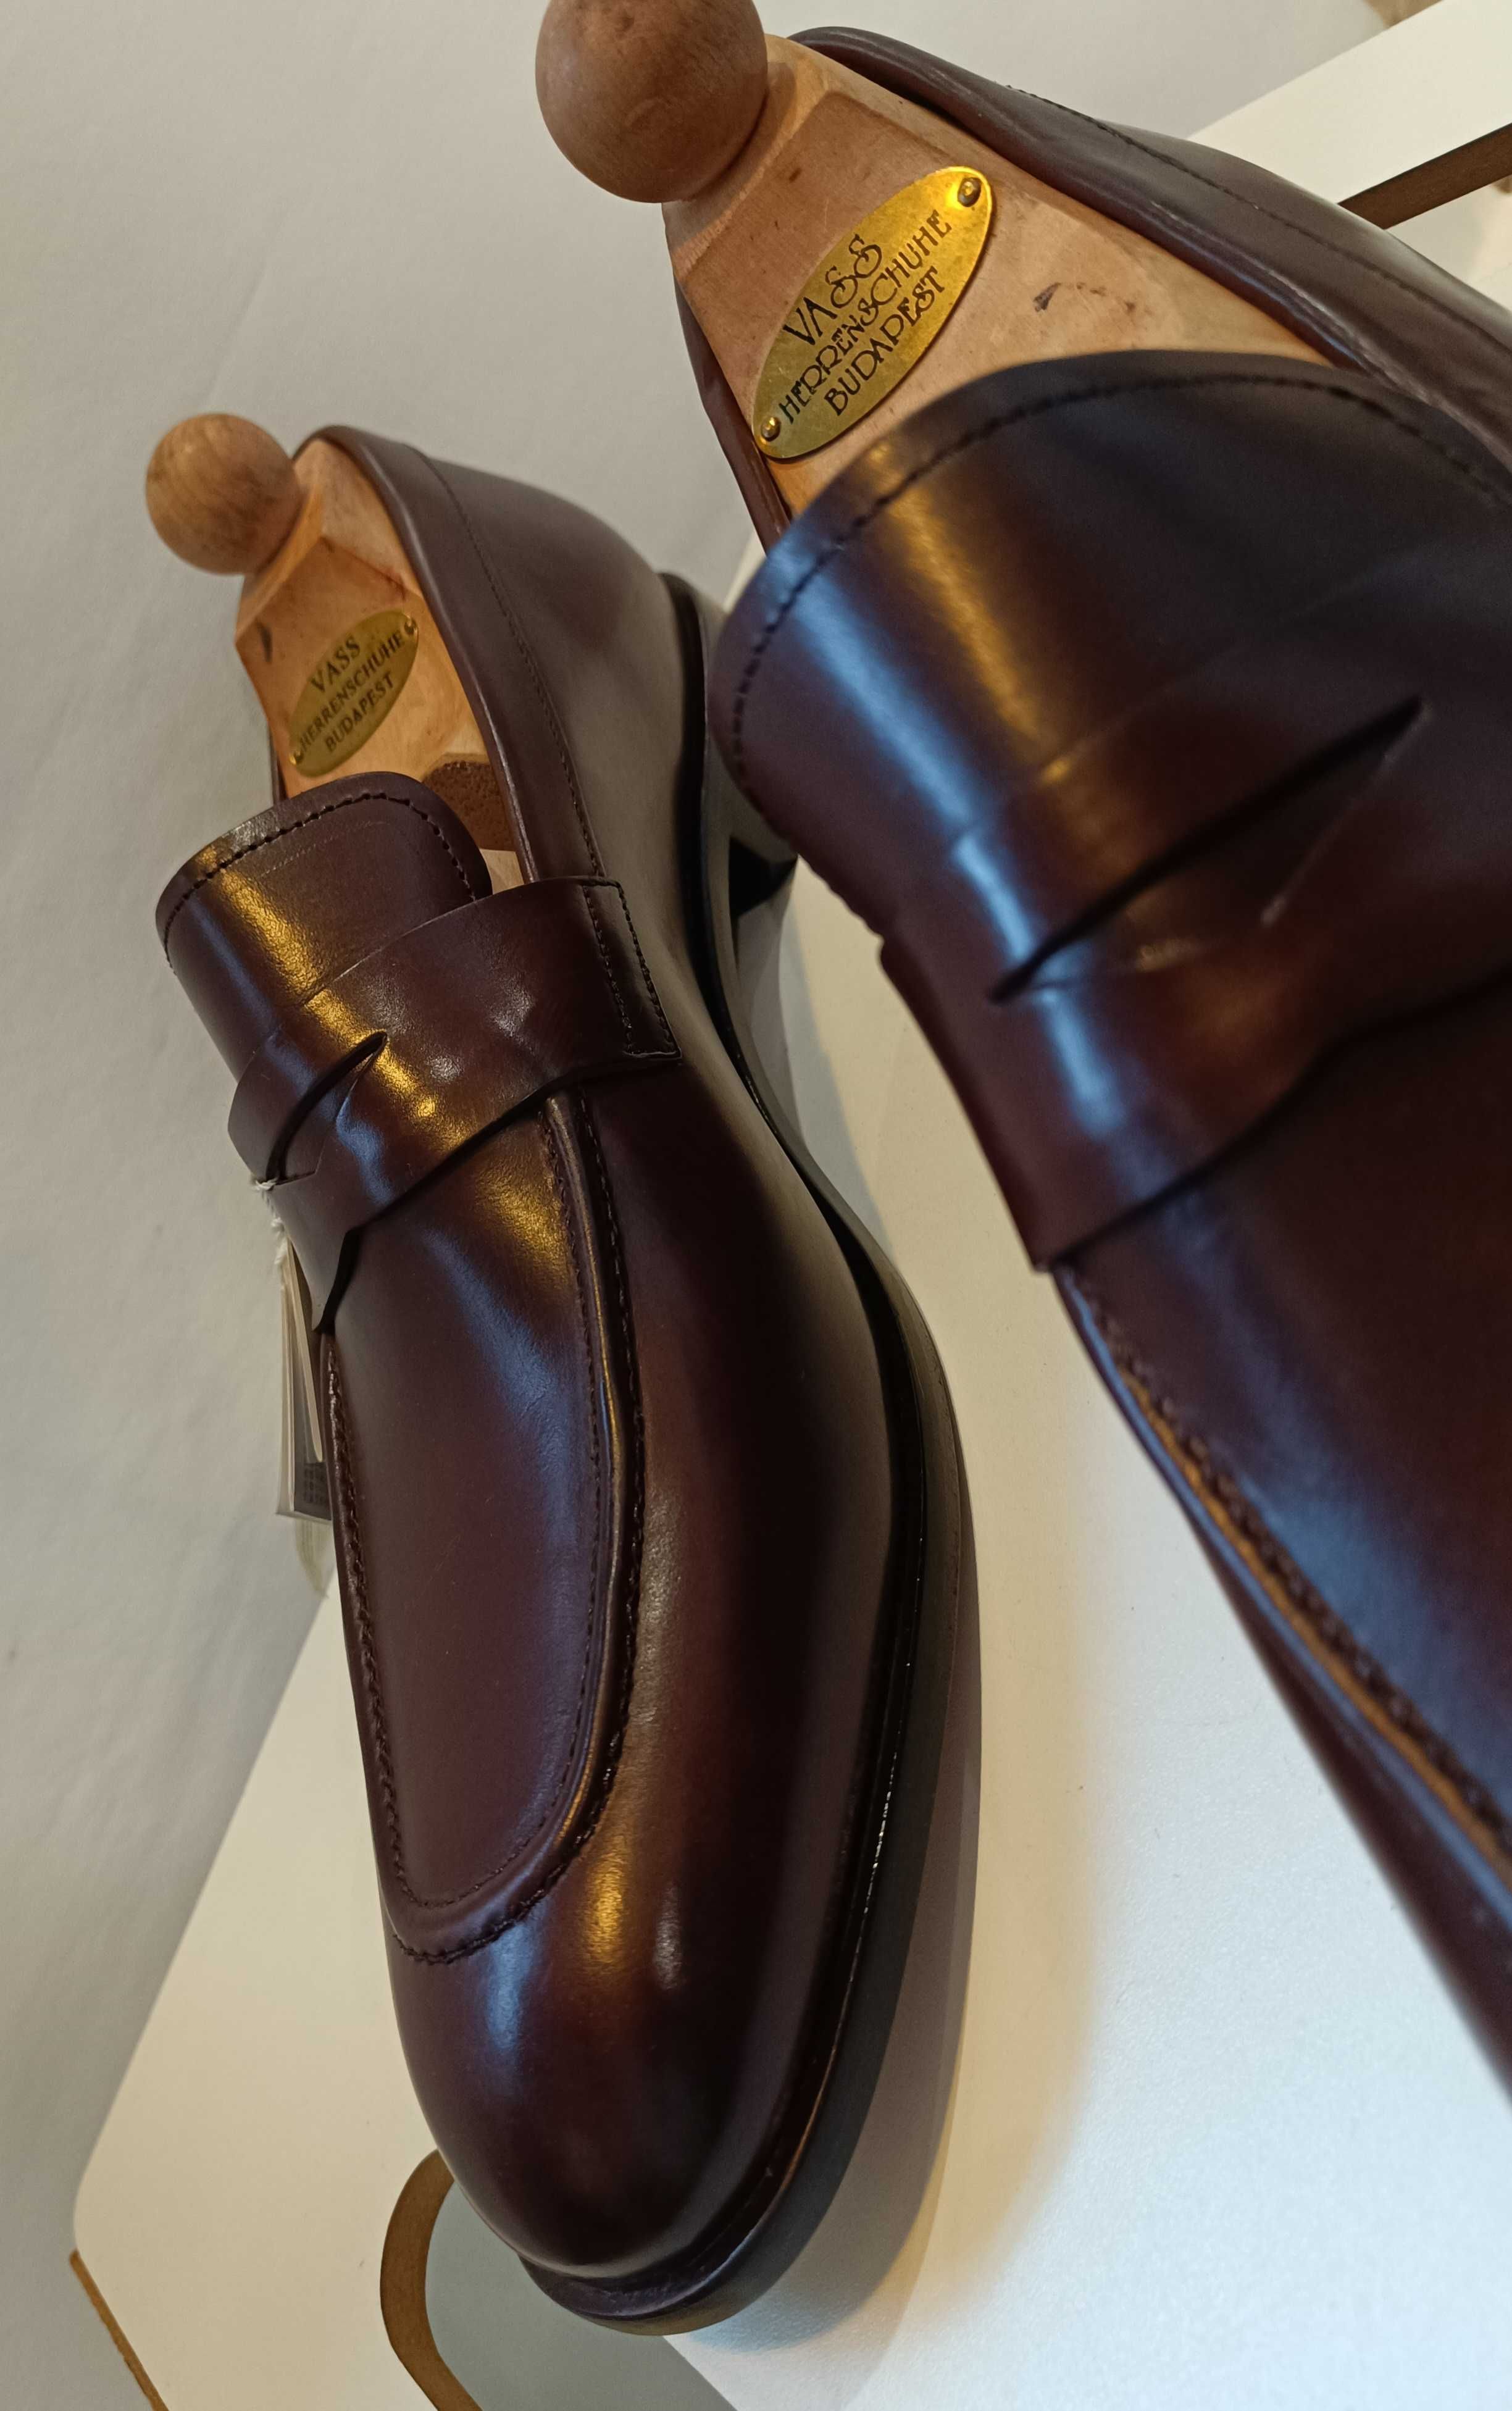 Pantofi loafer 45 penny premium GEOX Respira NOI piele naturala